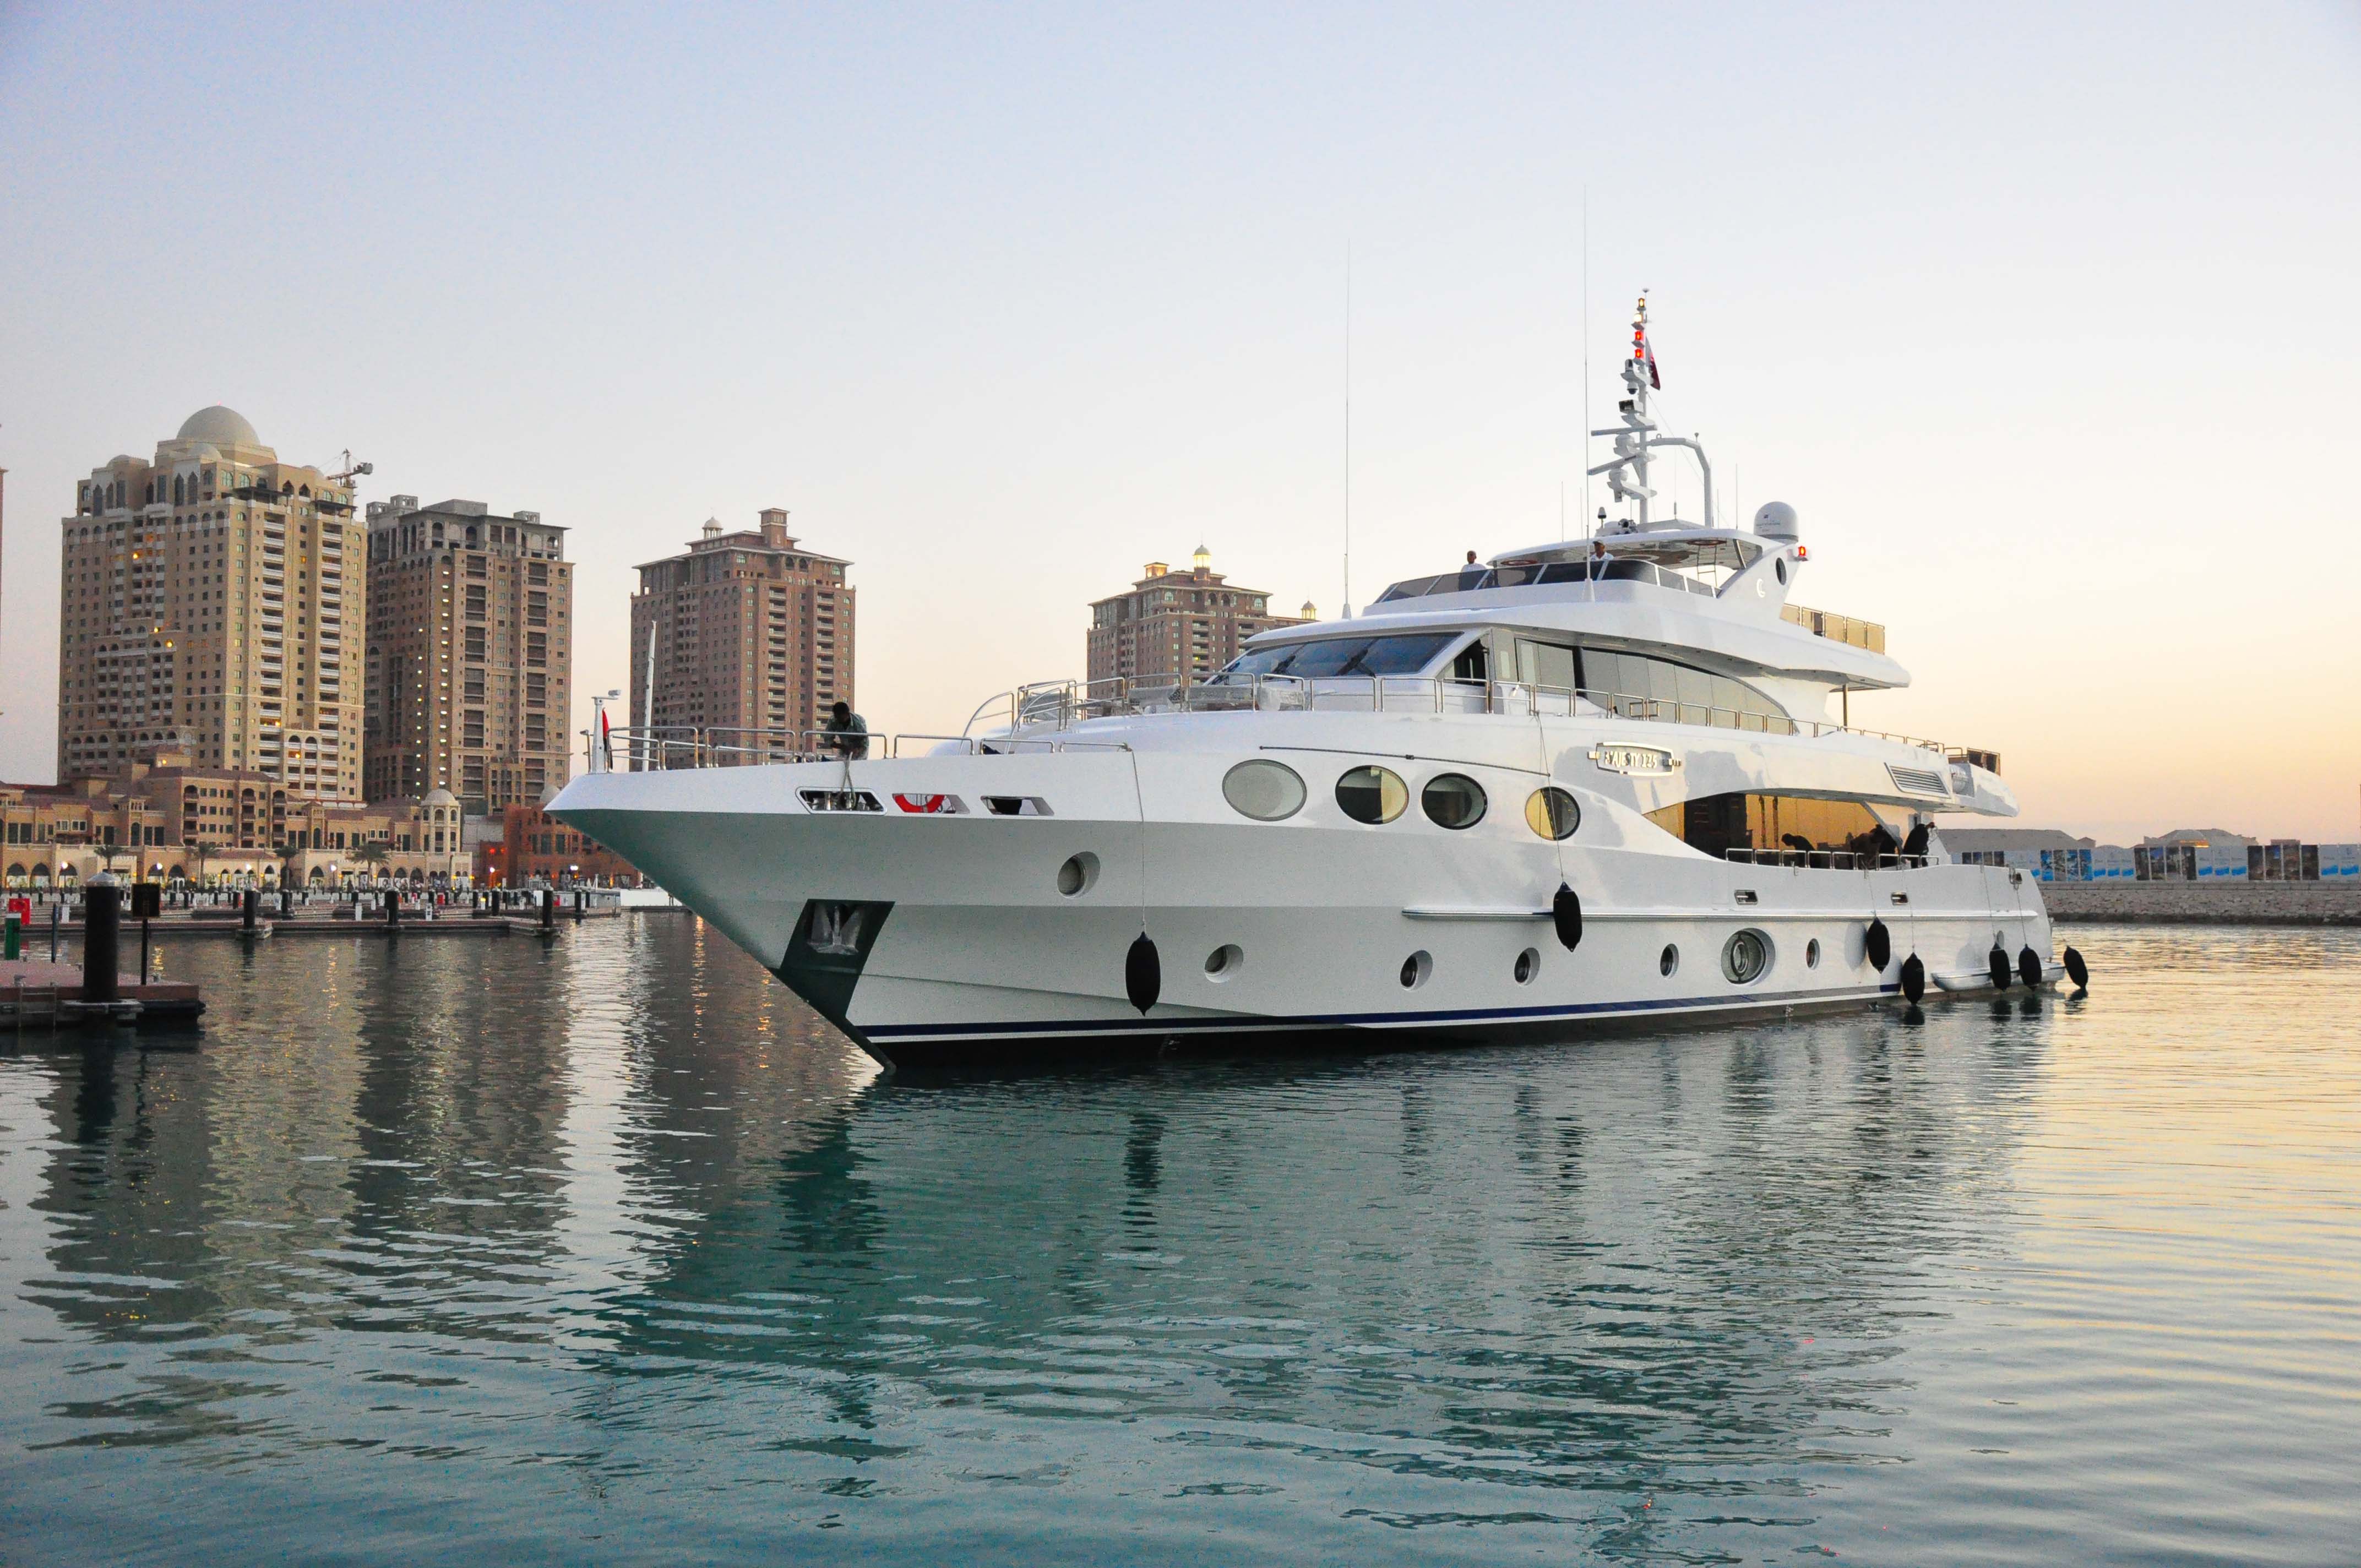 yacht sale qatar